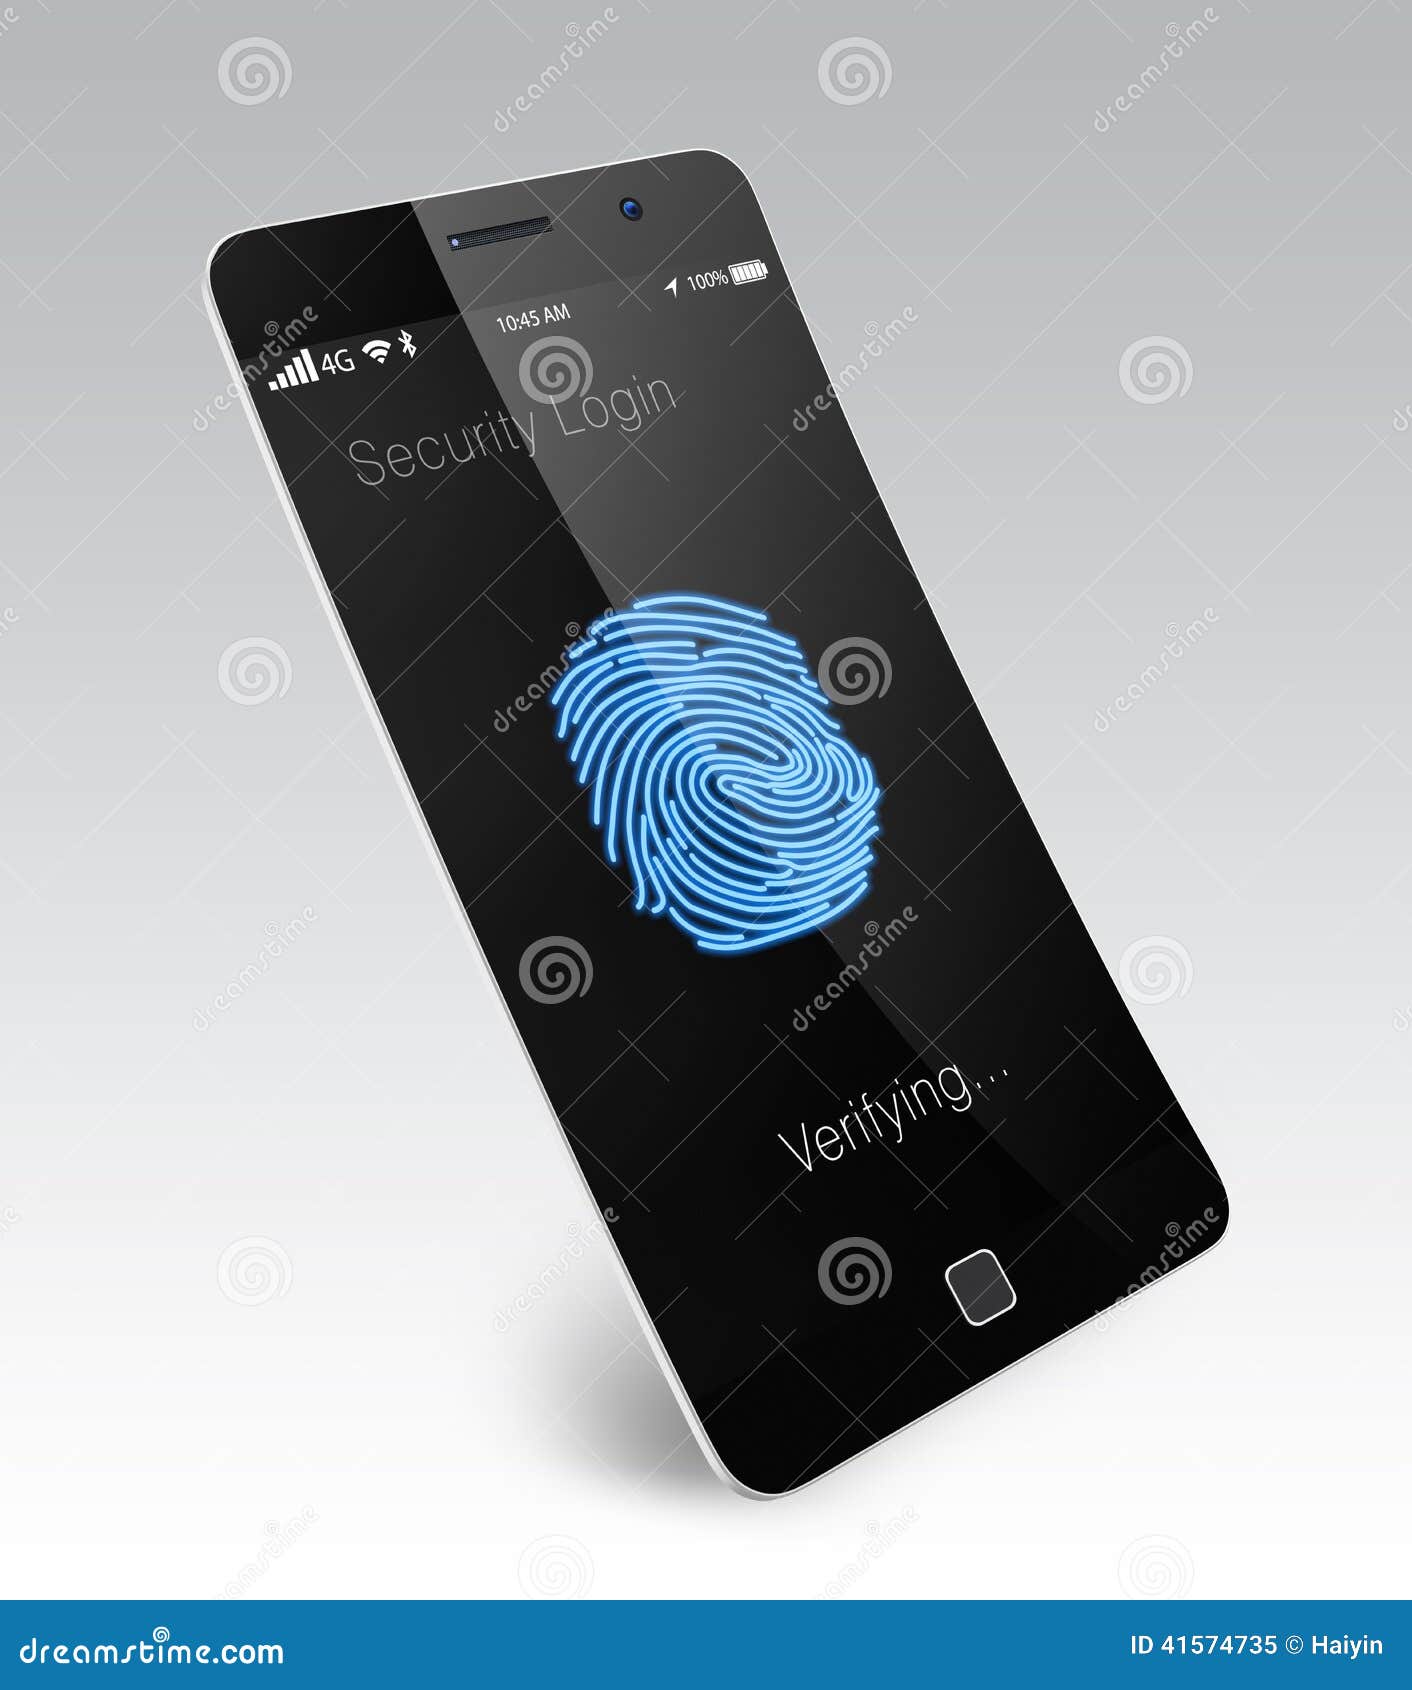 fingerprint authentication for smart phone